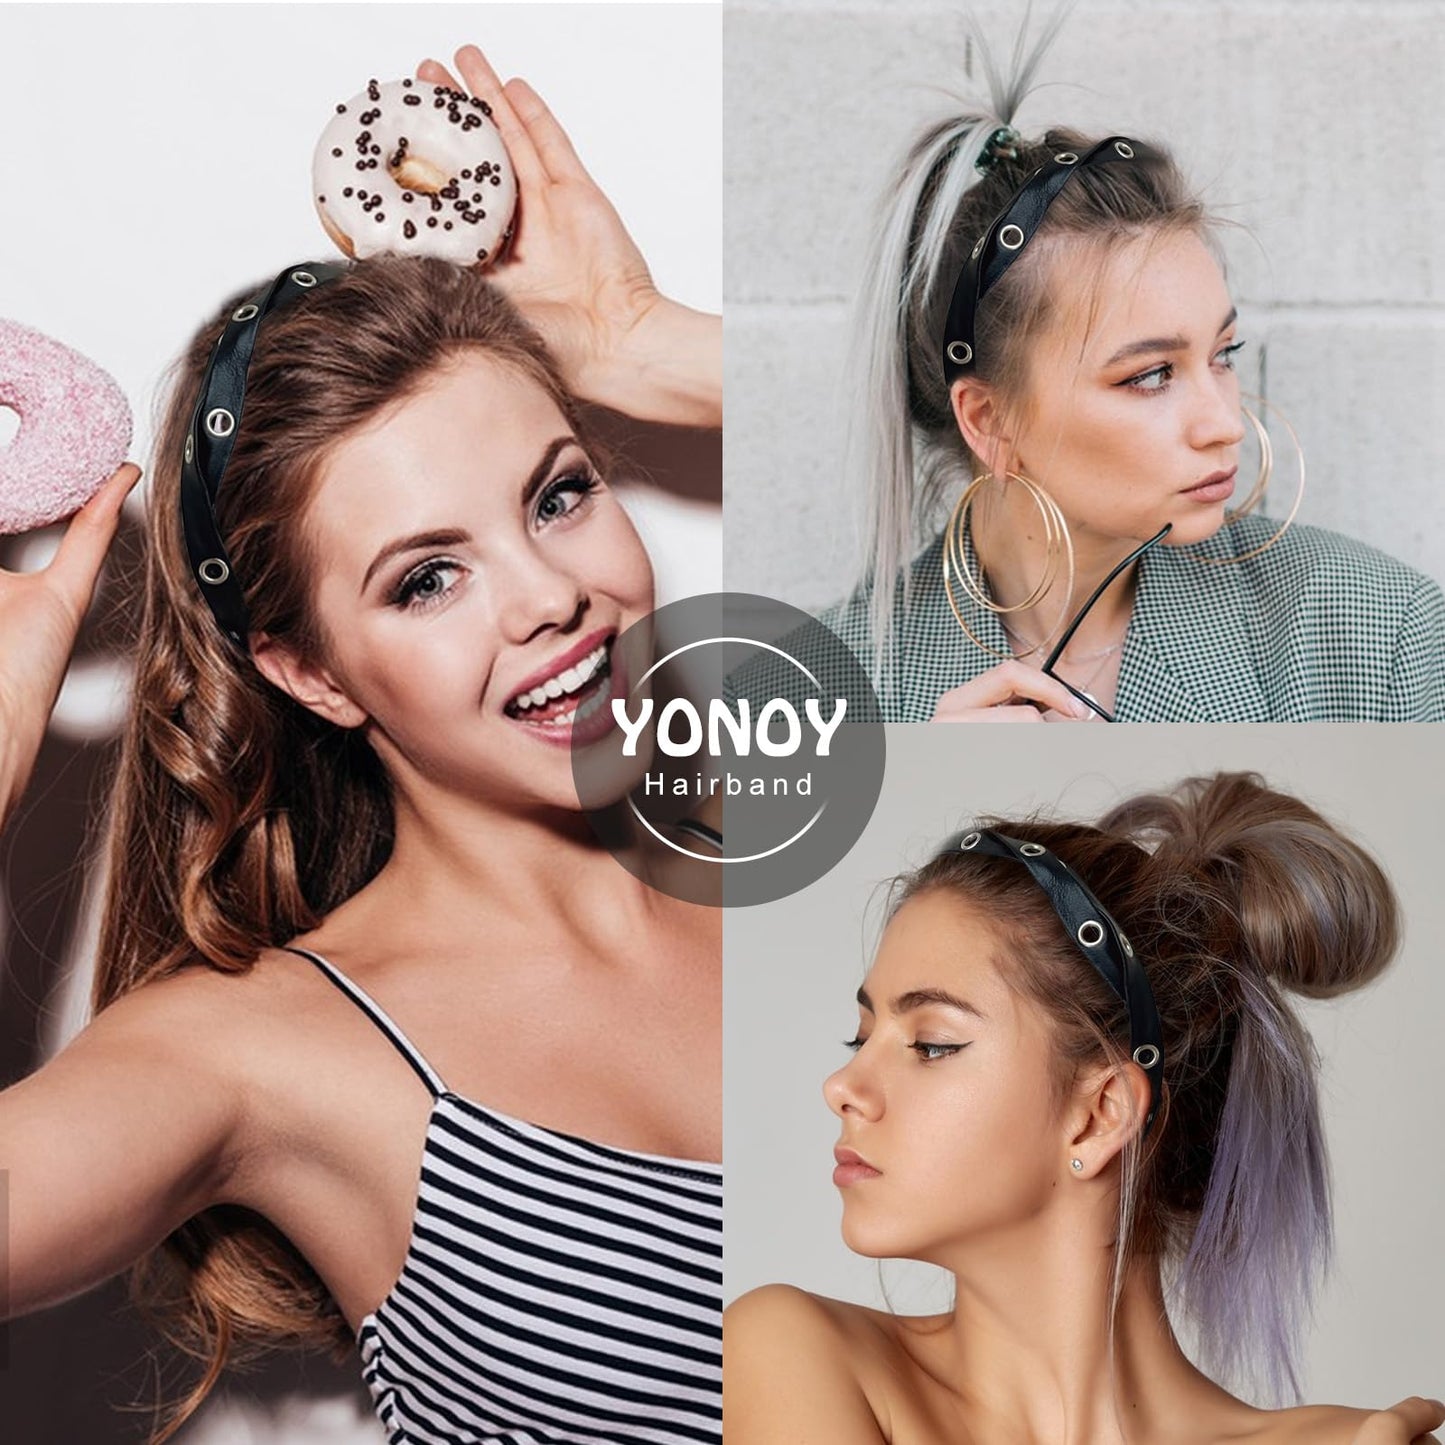 YONOY 3 Pcs Thin Leather rivets Headbands for Cool Girl, Rock Punk Hairband Anti-Slip Head Bands for Girl’s Hair Fashion Kont Headband Black Headbands for Girl’s Hair Accessories